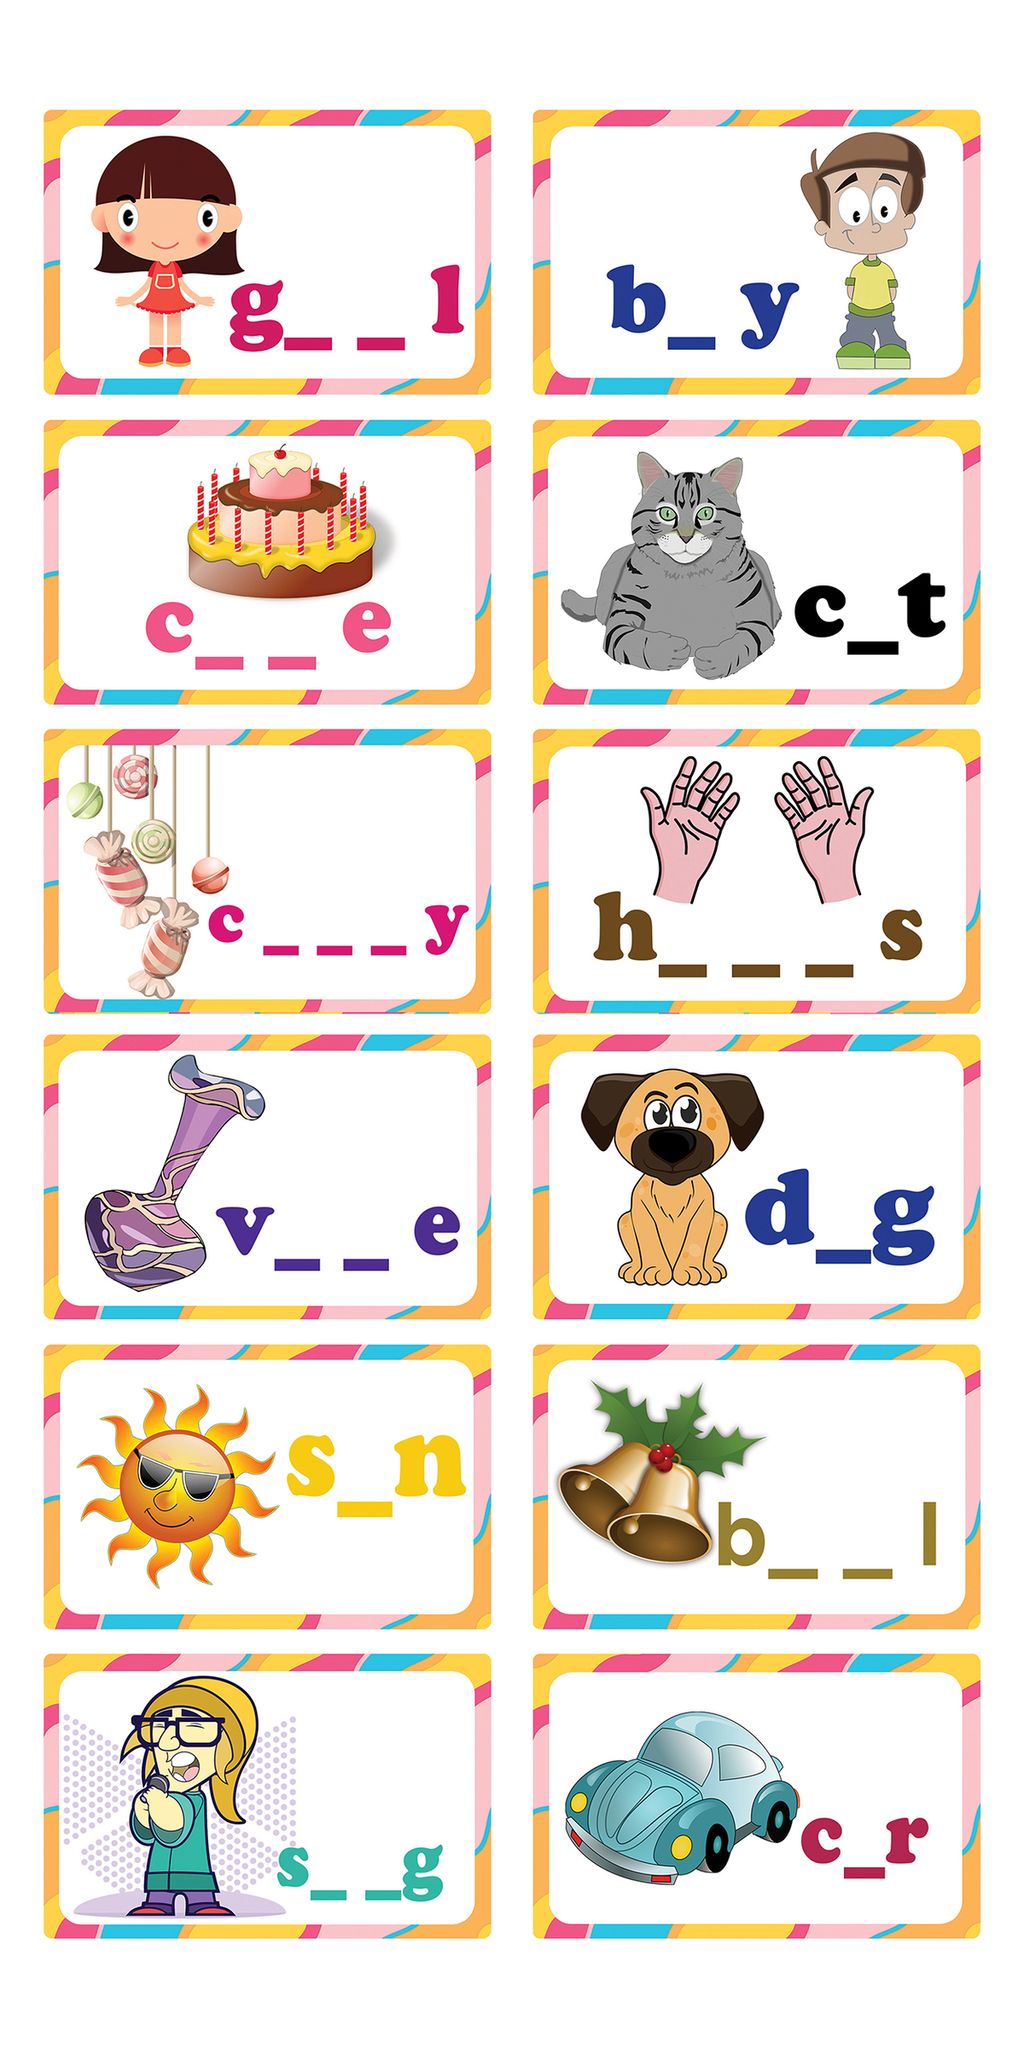 CNSBC1201 - Basic Spelling Learning Cards